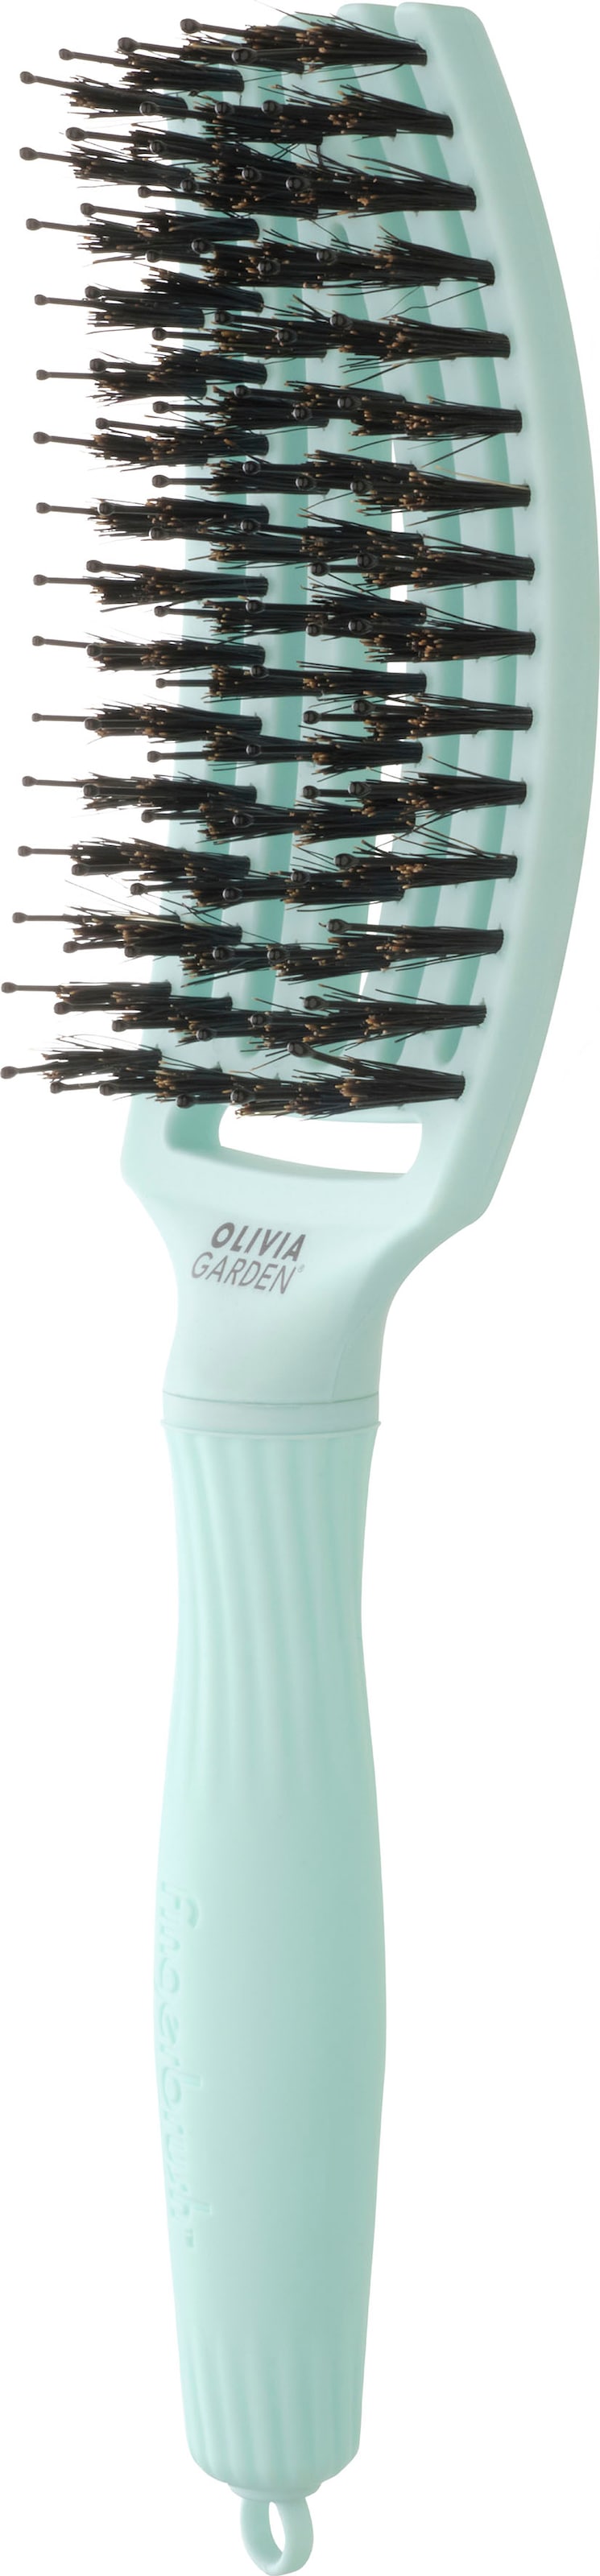 GARDEN 3 Combo mit Haarbürste XXL Garantie »Fingerbrush Medium« Jahren OLIVIA